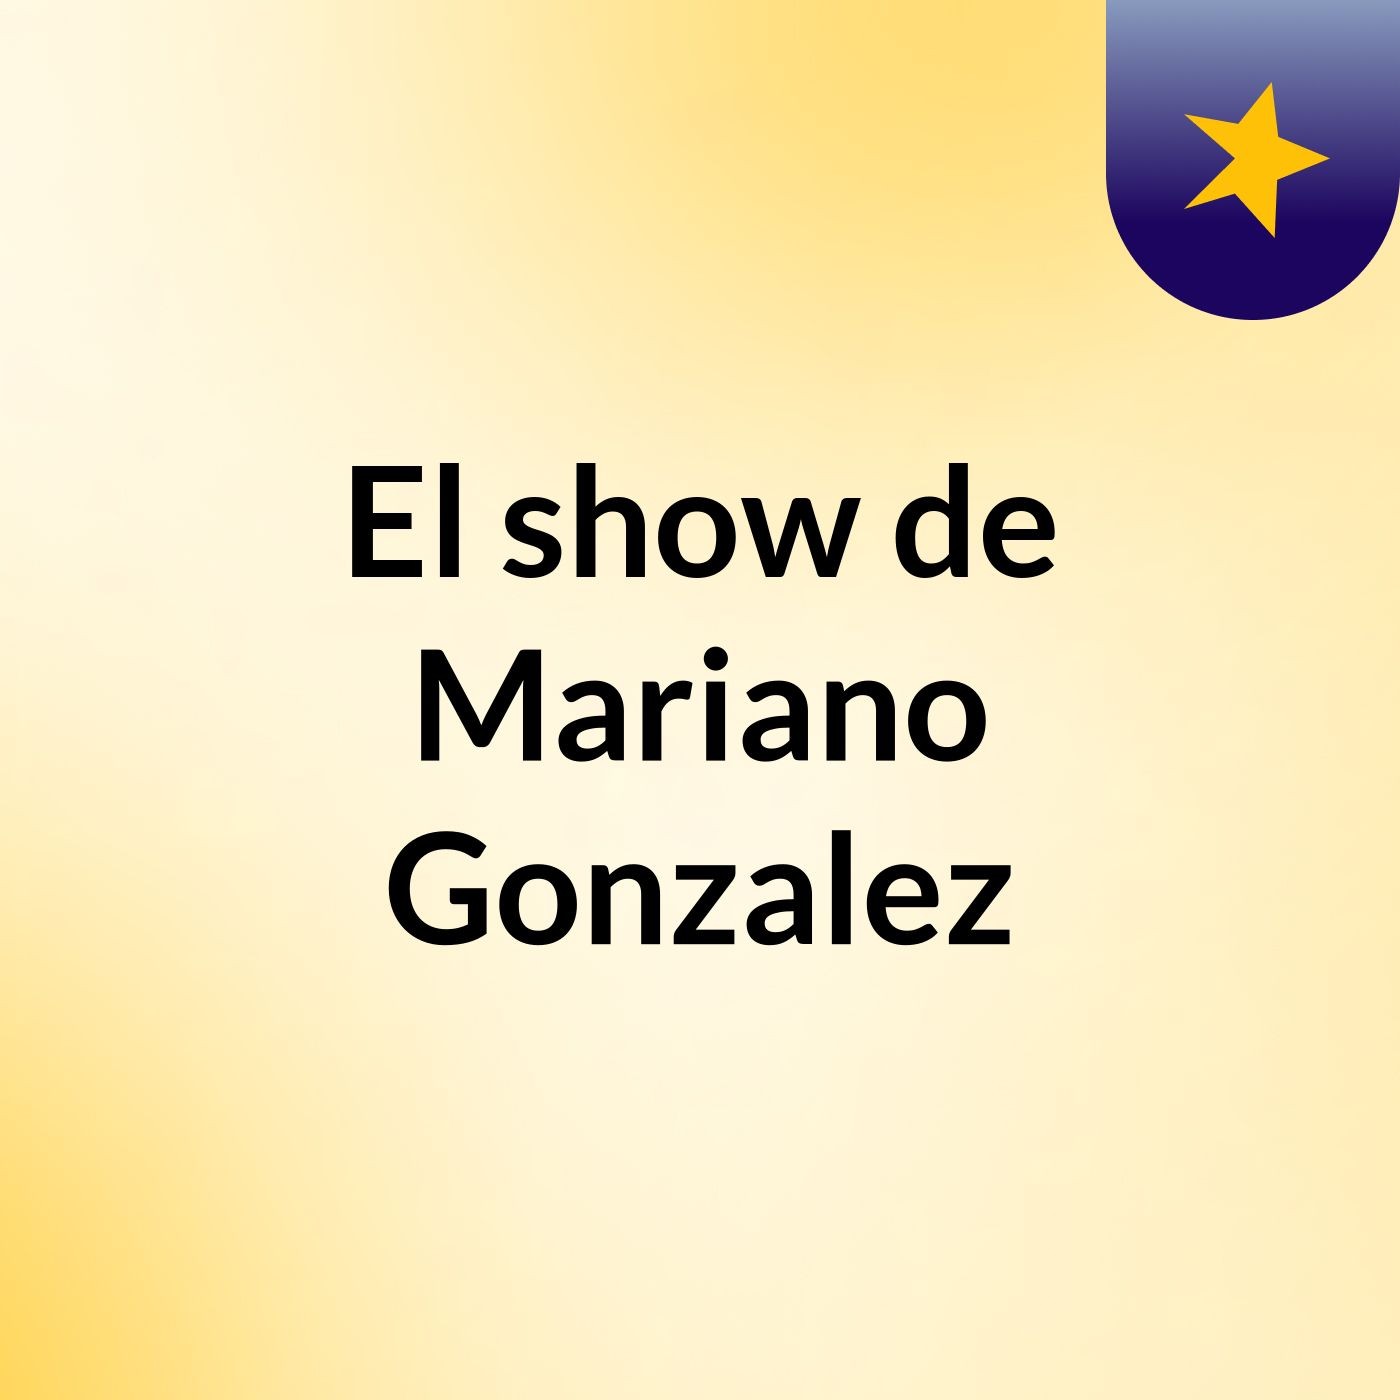 El show de Mariano Gonzalez